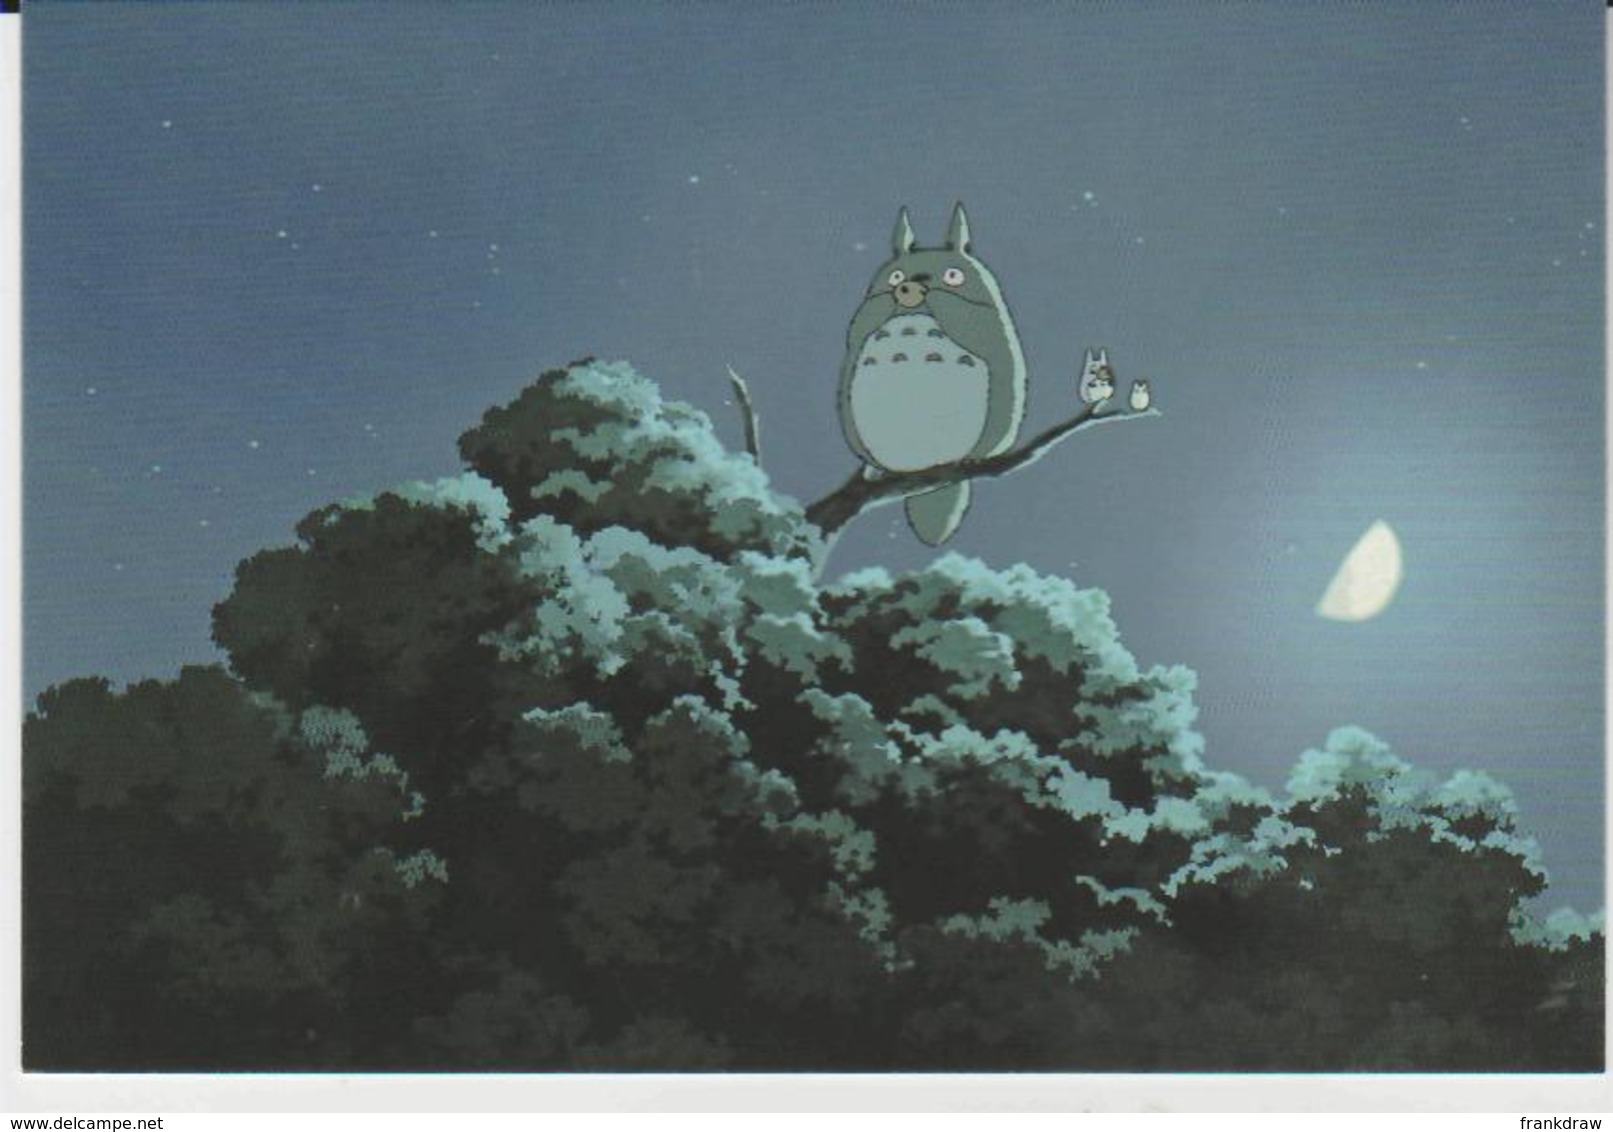 Postcard - Studio Ghibli - My Neighbor Totoro -T Wit T Woo - New - Unclassified